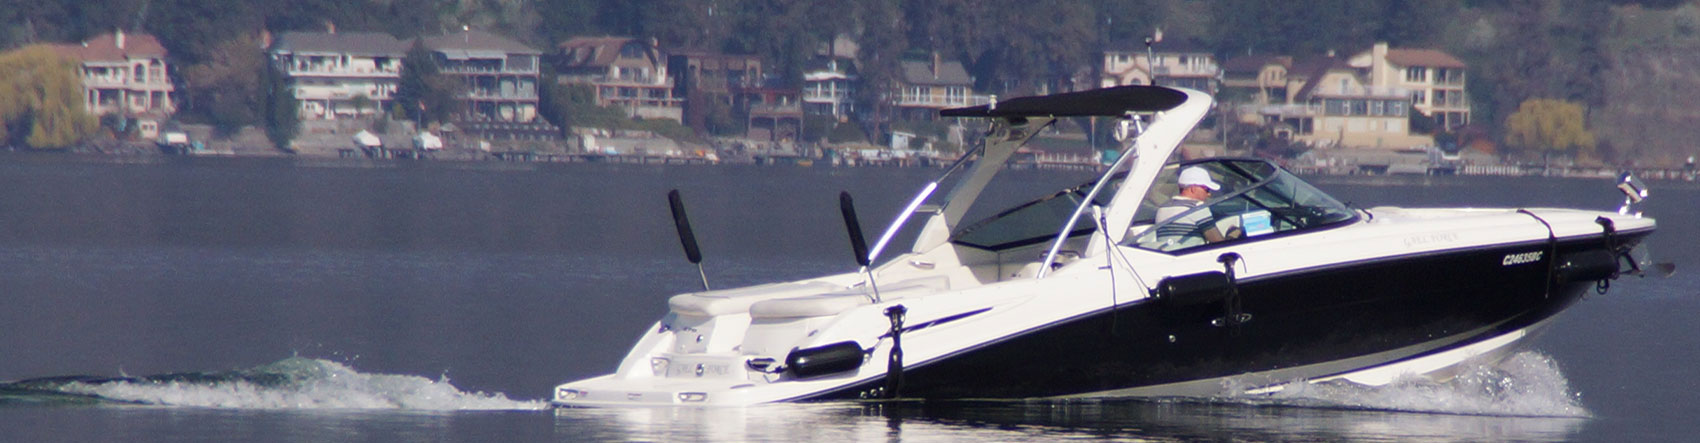 www.boattourskelowna.com, Kelowna Water Taxi Cruises, offering enjoyable boat tours on Lake Okanagan.